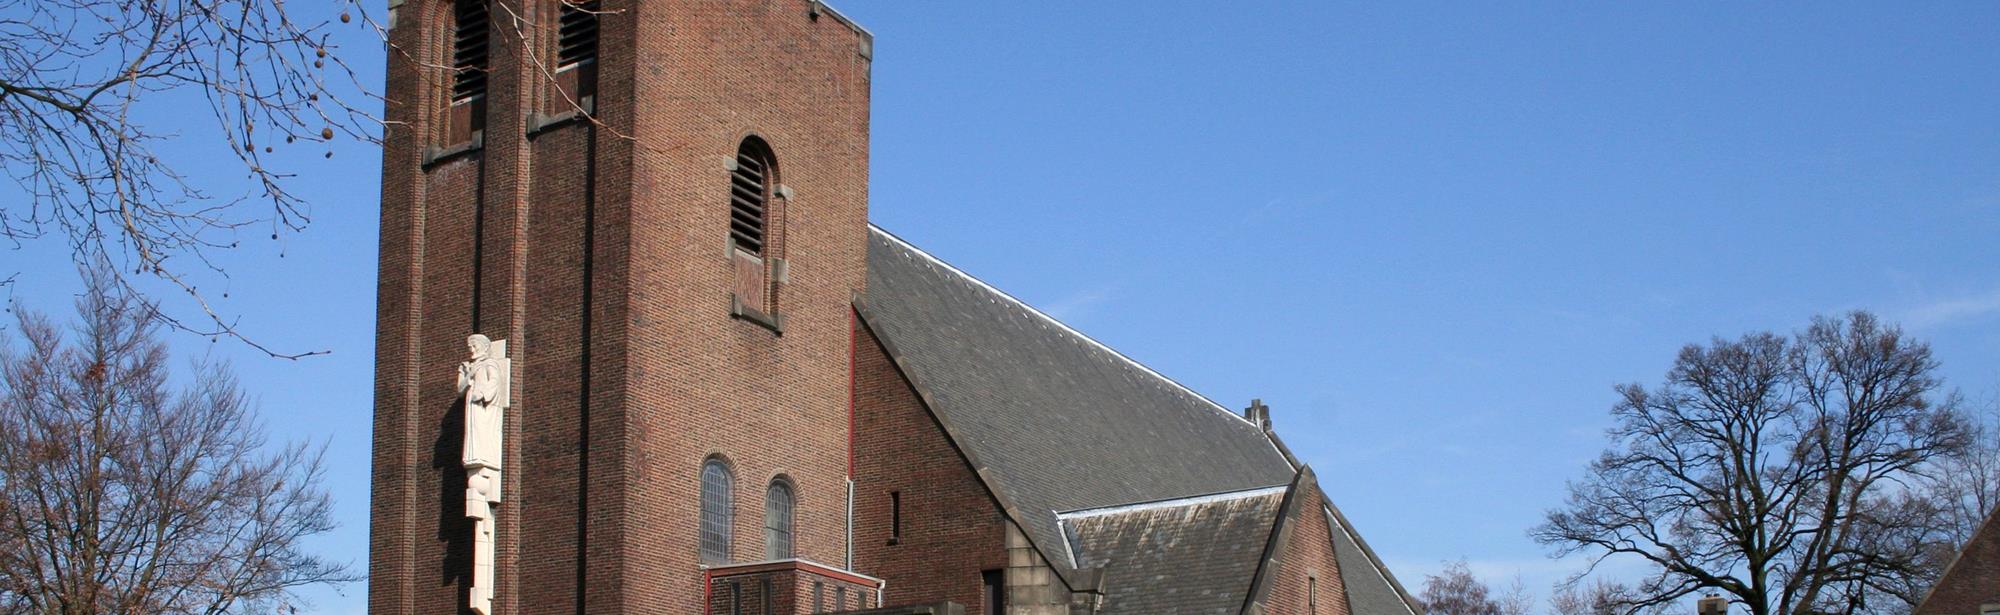 St. Vincentiuskerk met klooster-pastorie